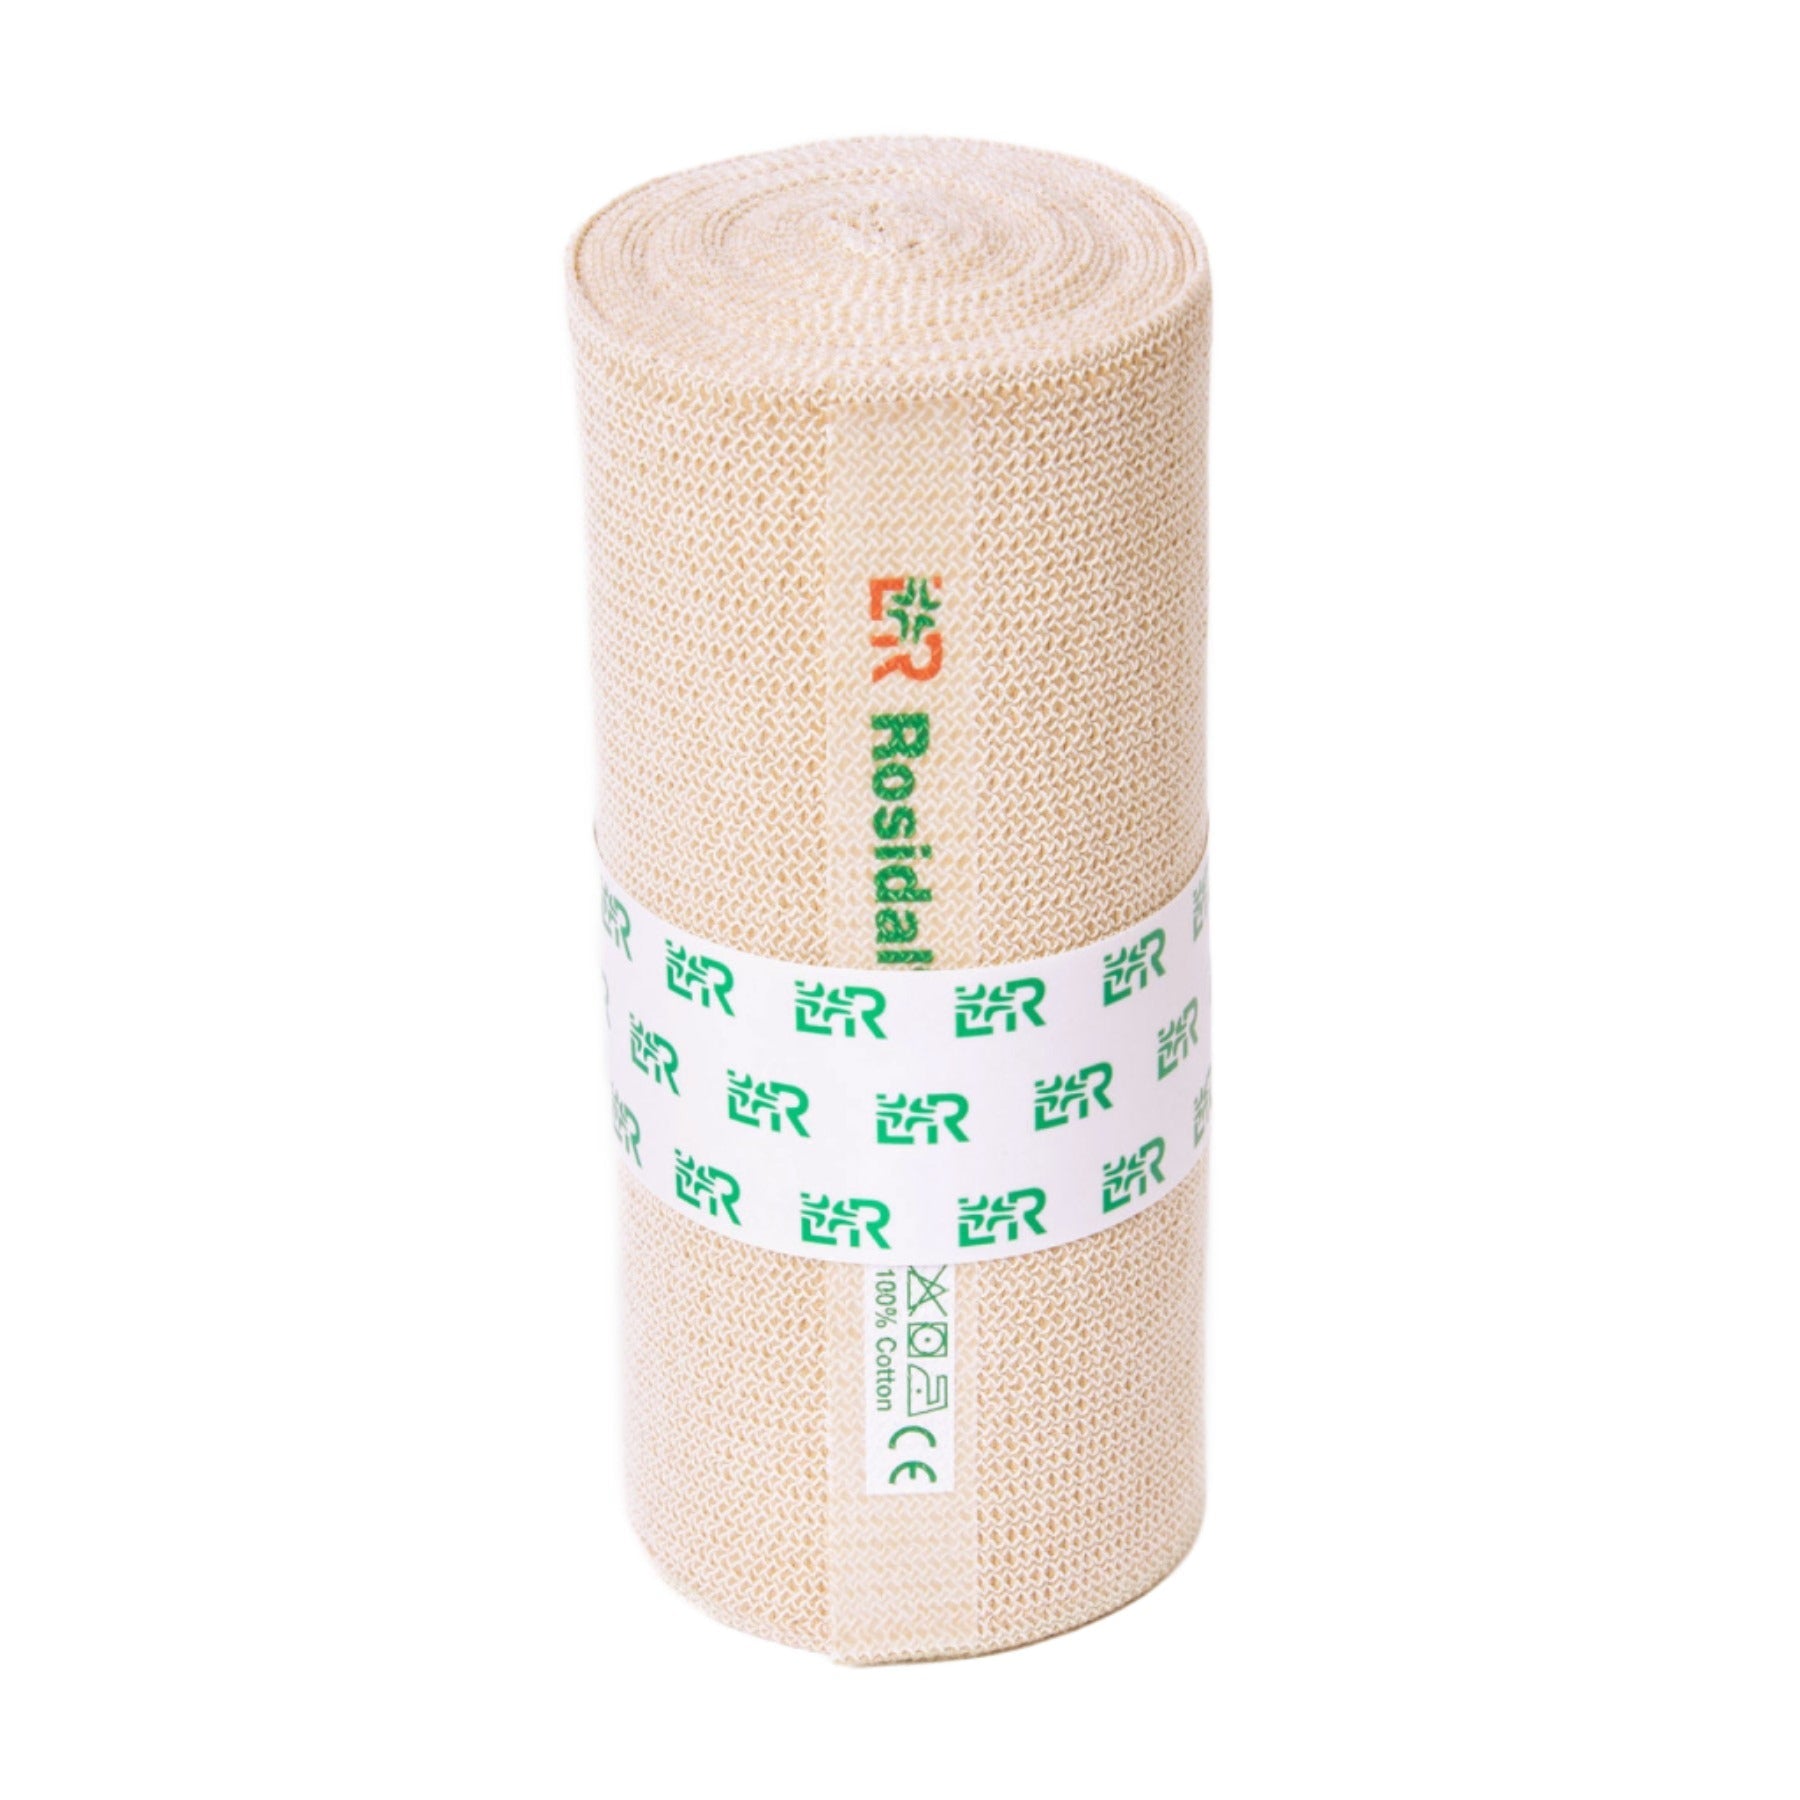 L&R Rosidal® K Short Stretch Bandage, 12 cm x 5 m